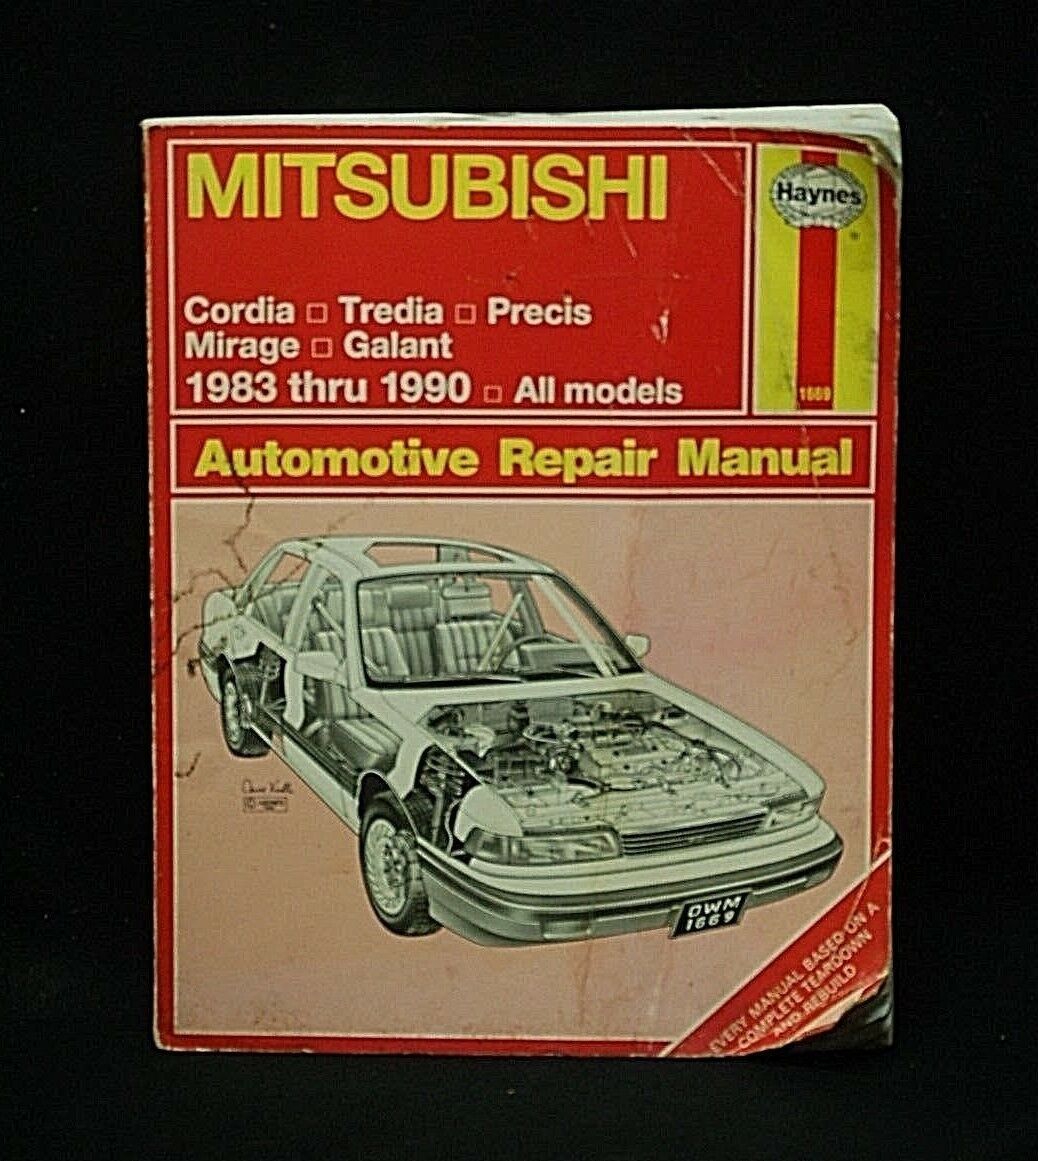 Haynes 1669 Mitsubishi Automotive Repair Manual Book 1983 ~ 1990 - $8.90